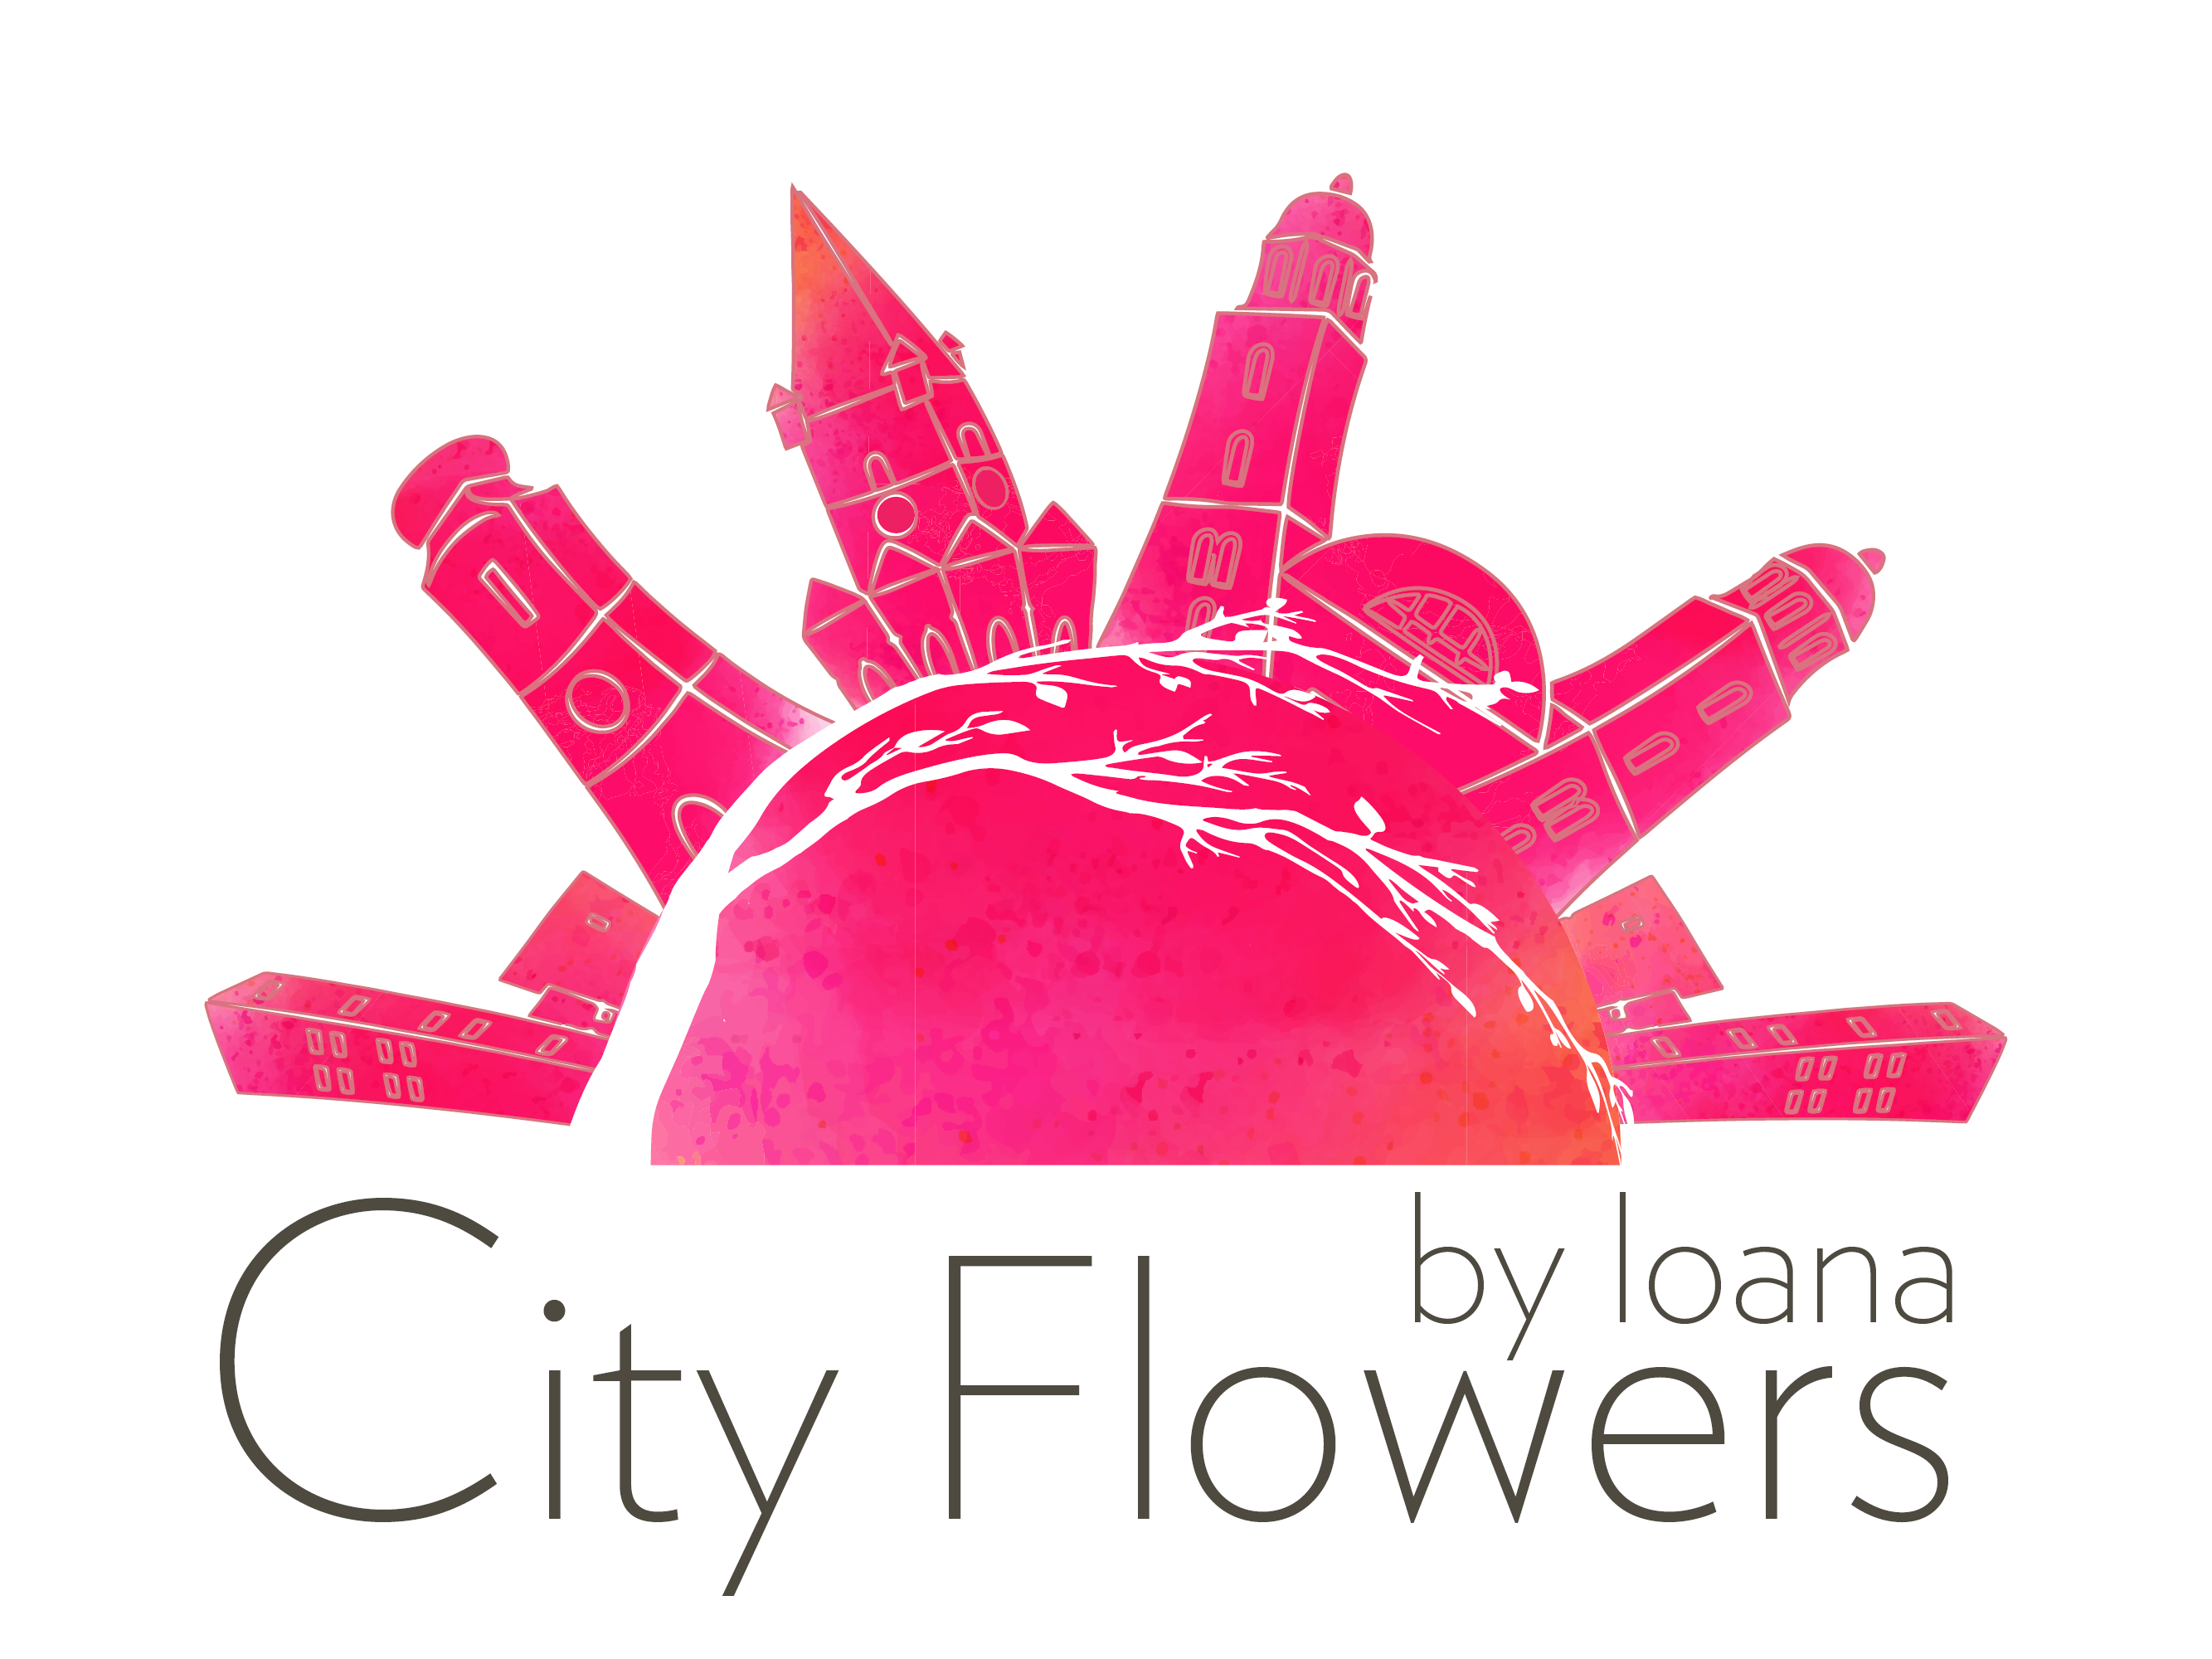 City Flowers by Ioana